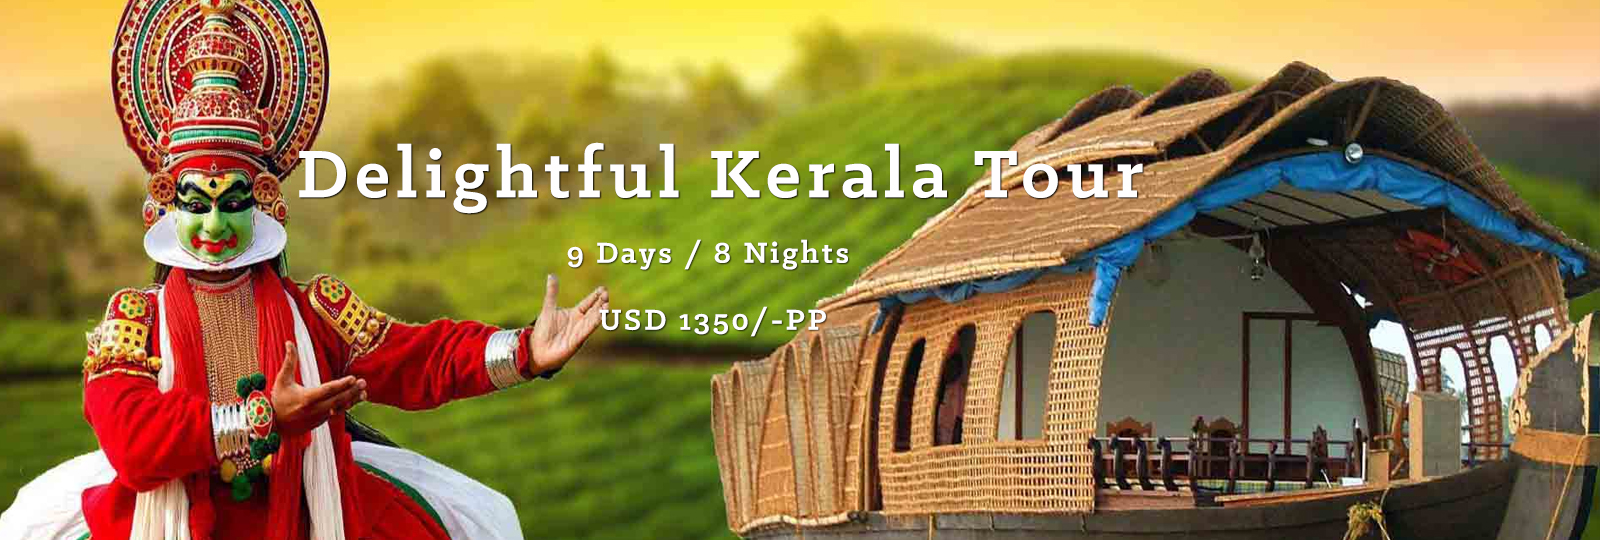 Delightful Kerala Tour 